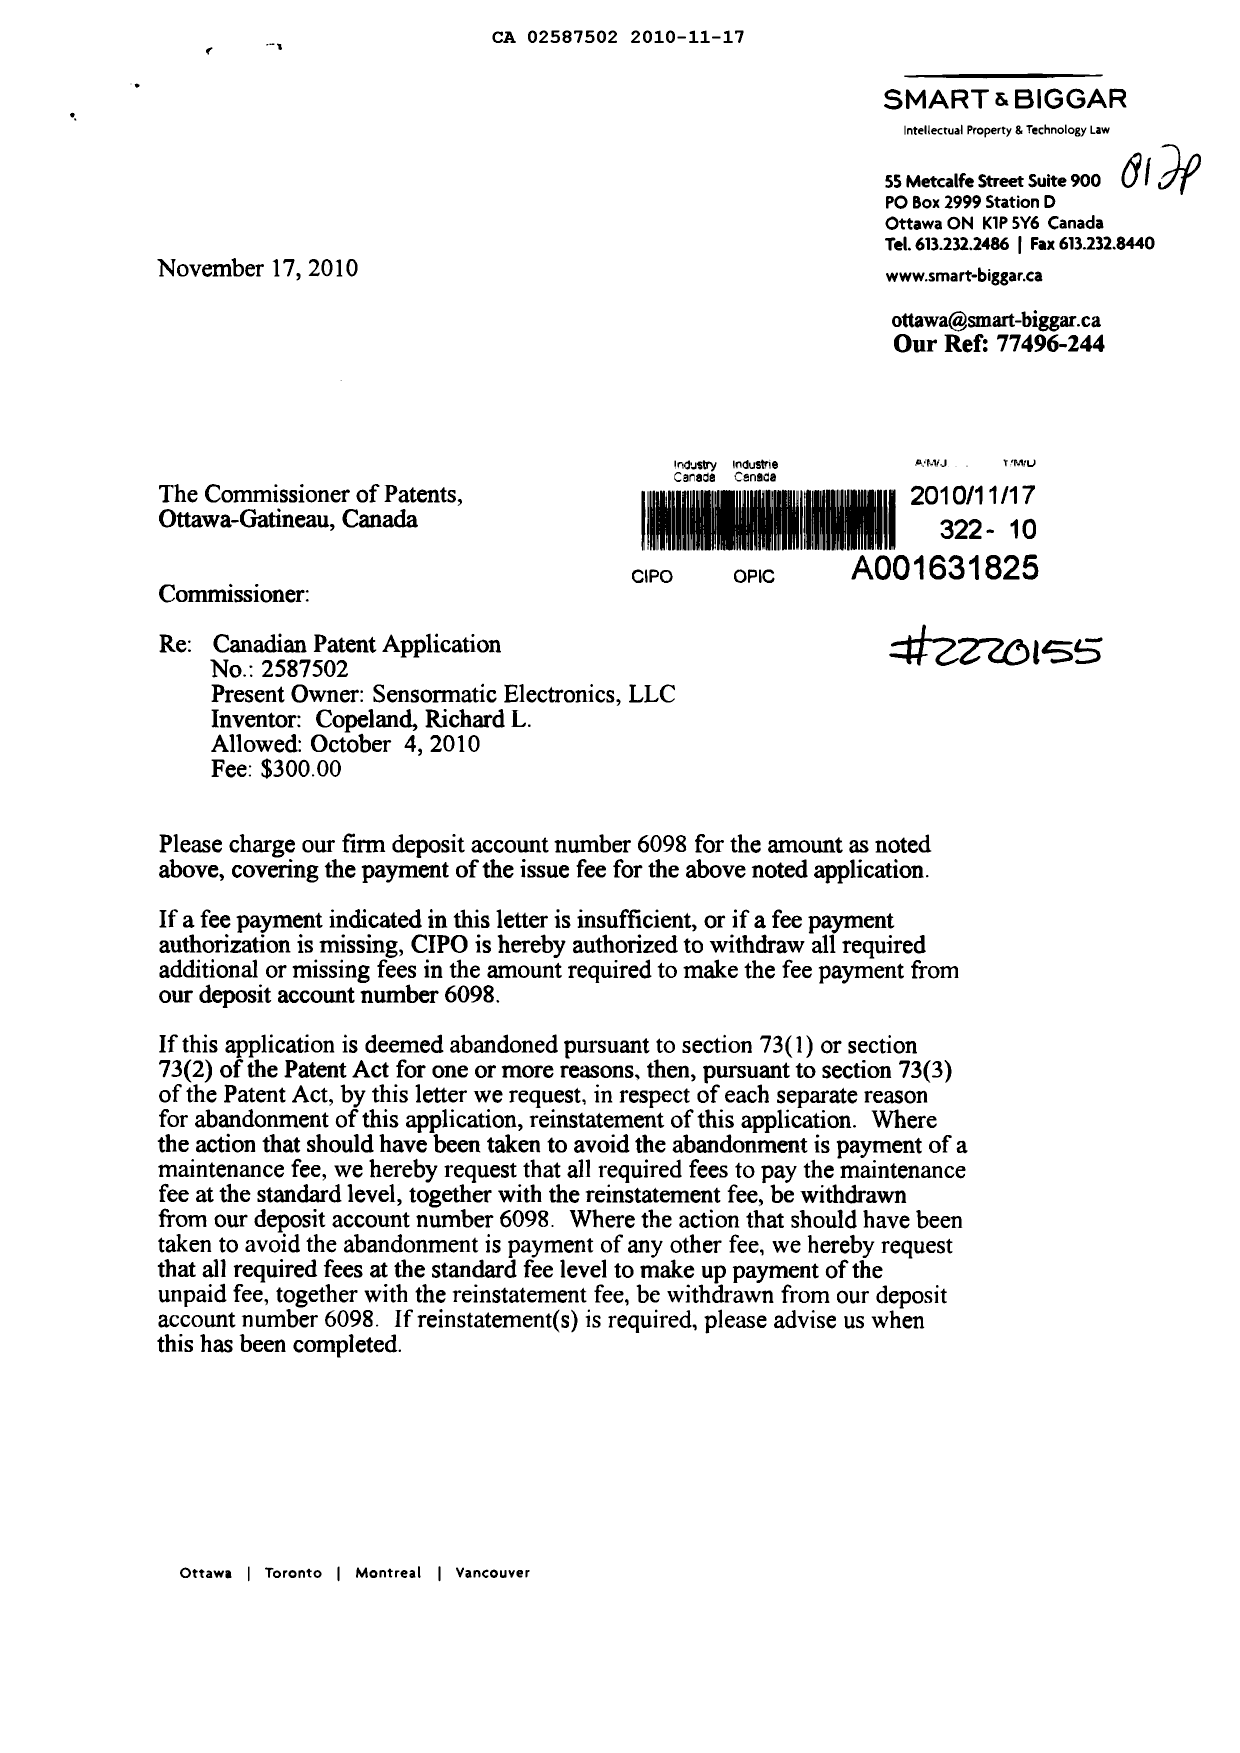 Canadian Patent Document 2587502. Correspondence 20101117. Image 1 of 2